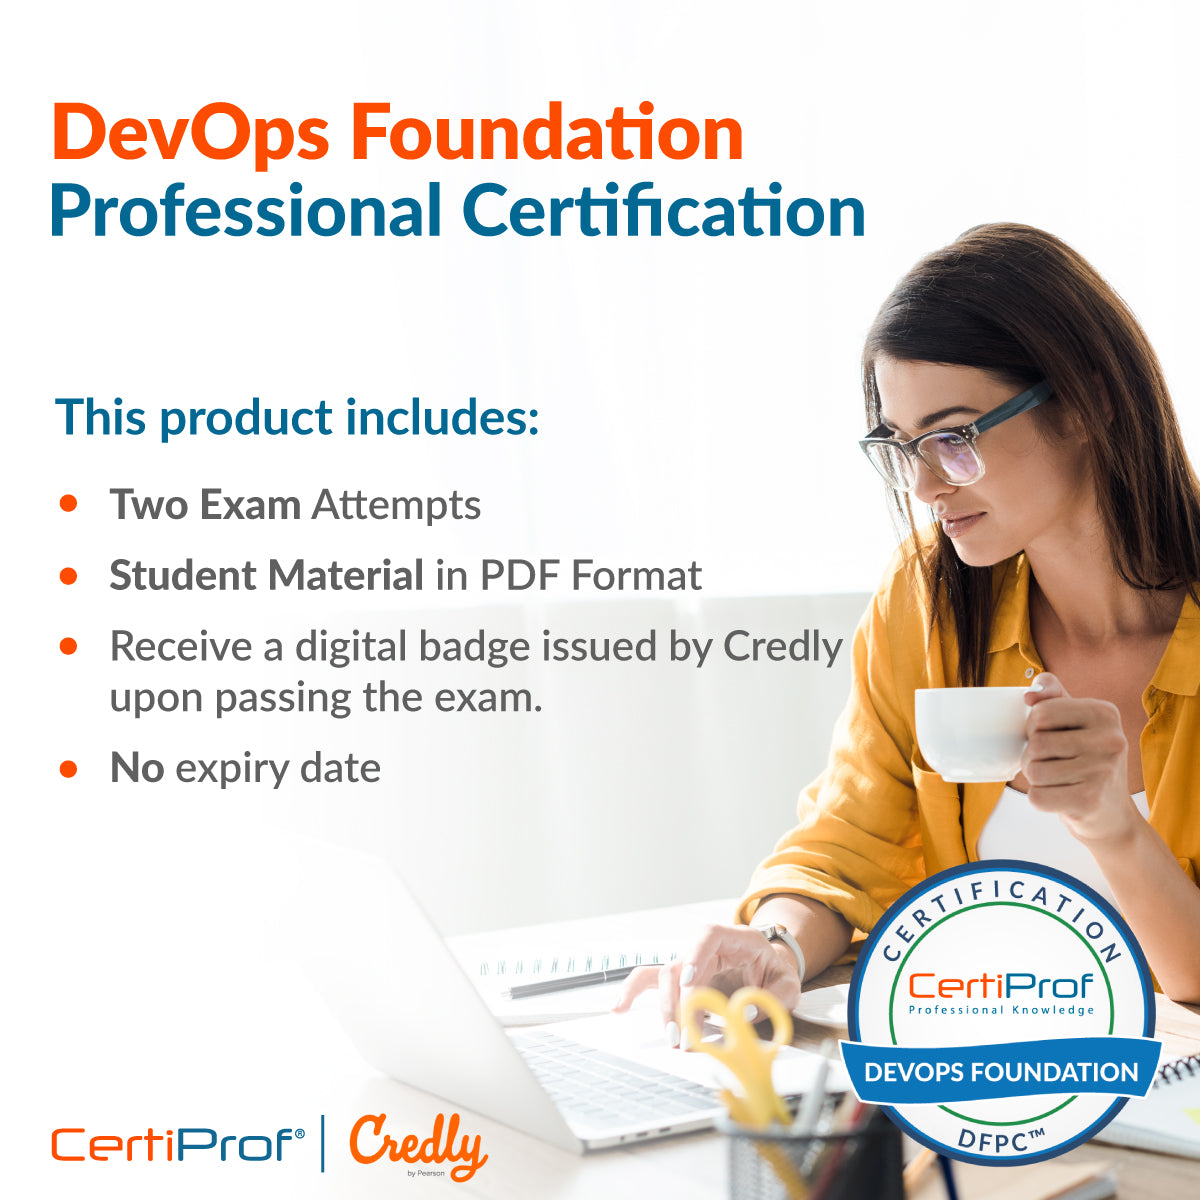 DevOps Foundation Professional Certification